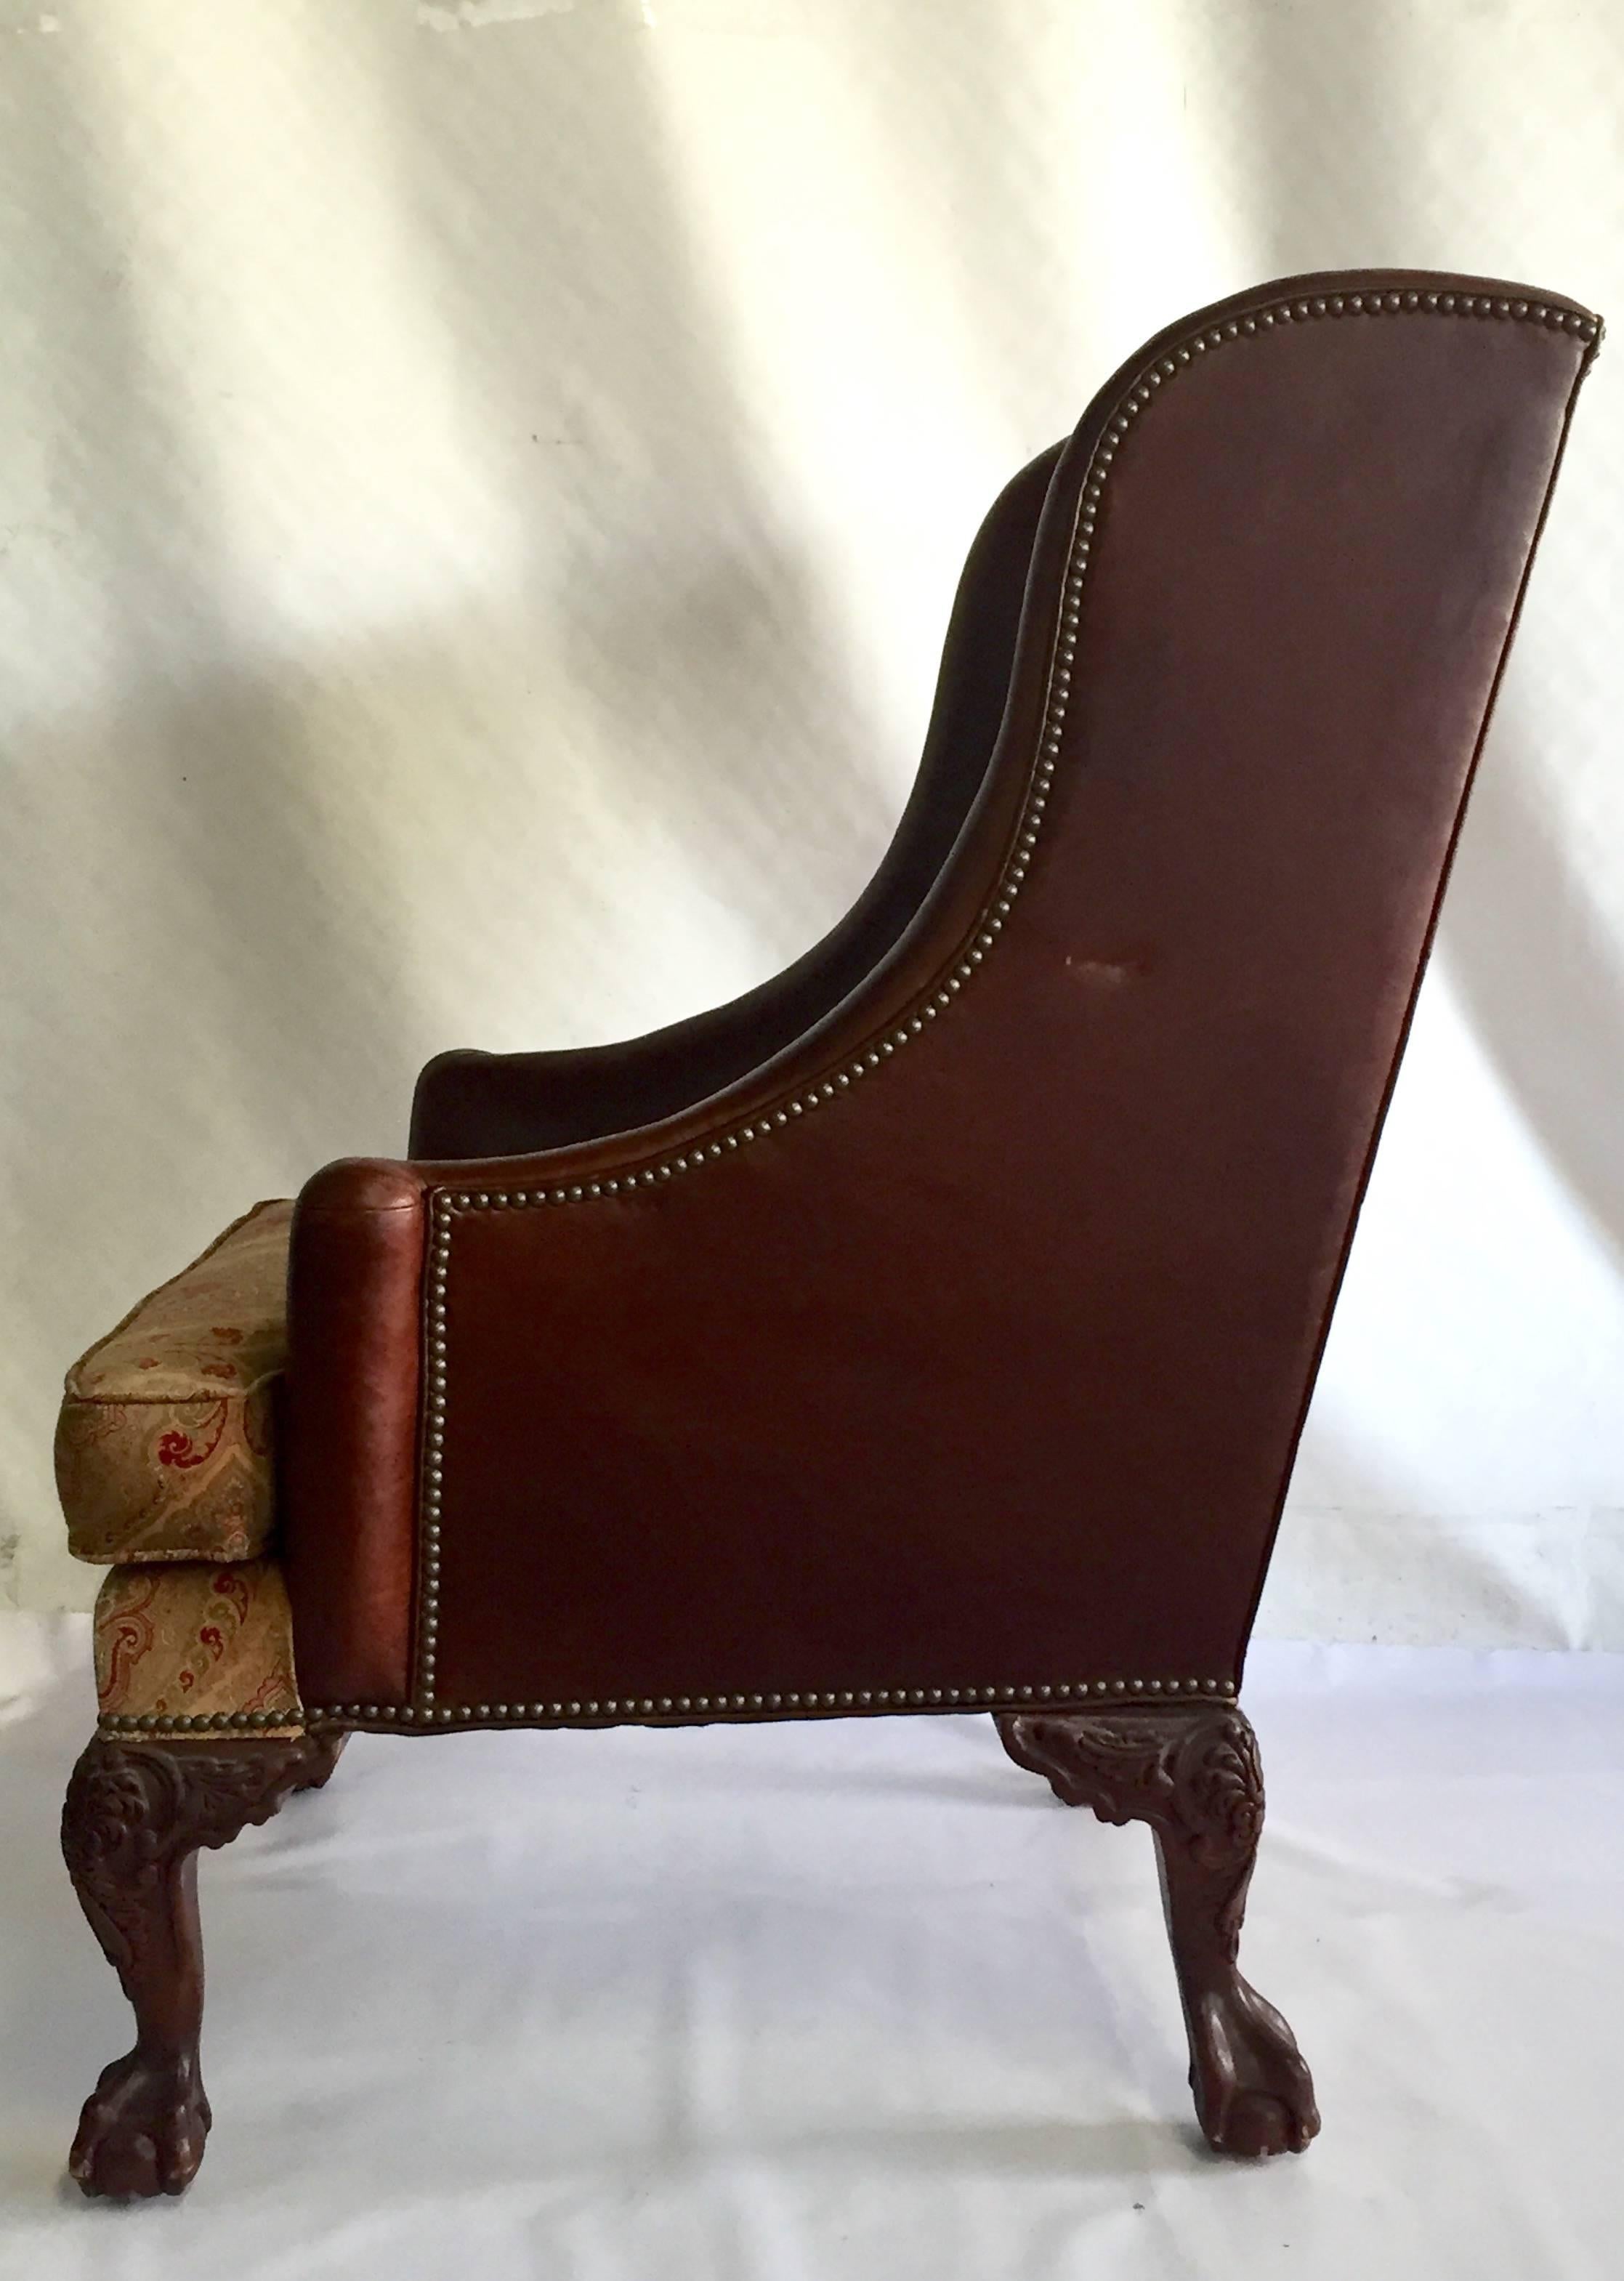 henredon leather chair and ottoman